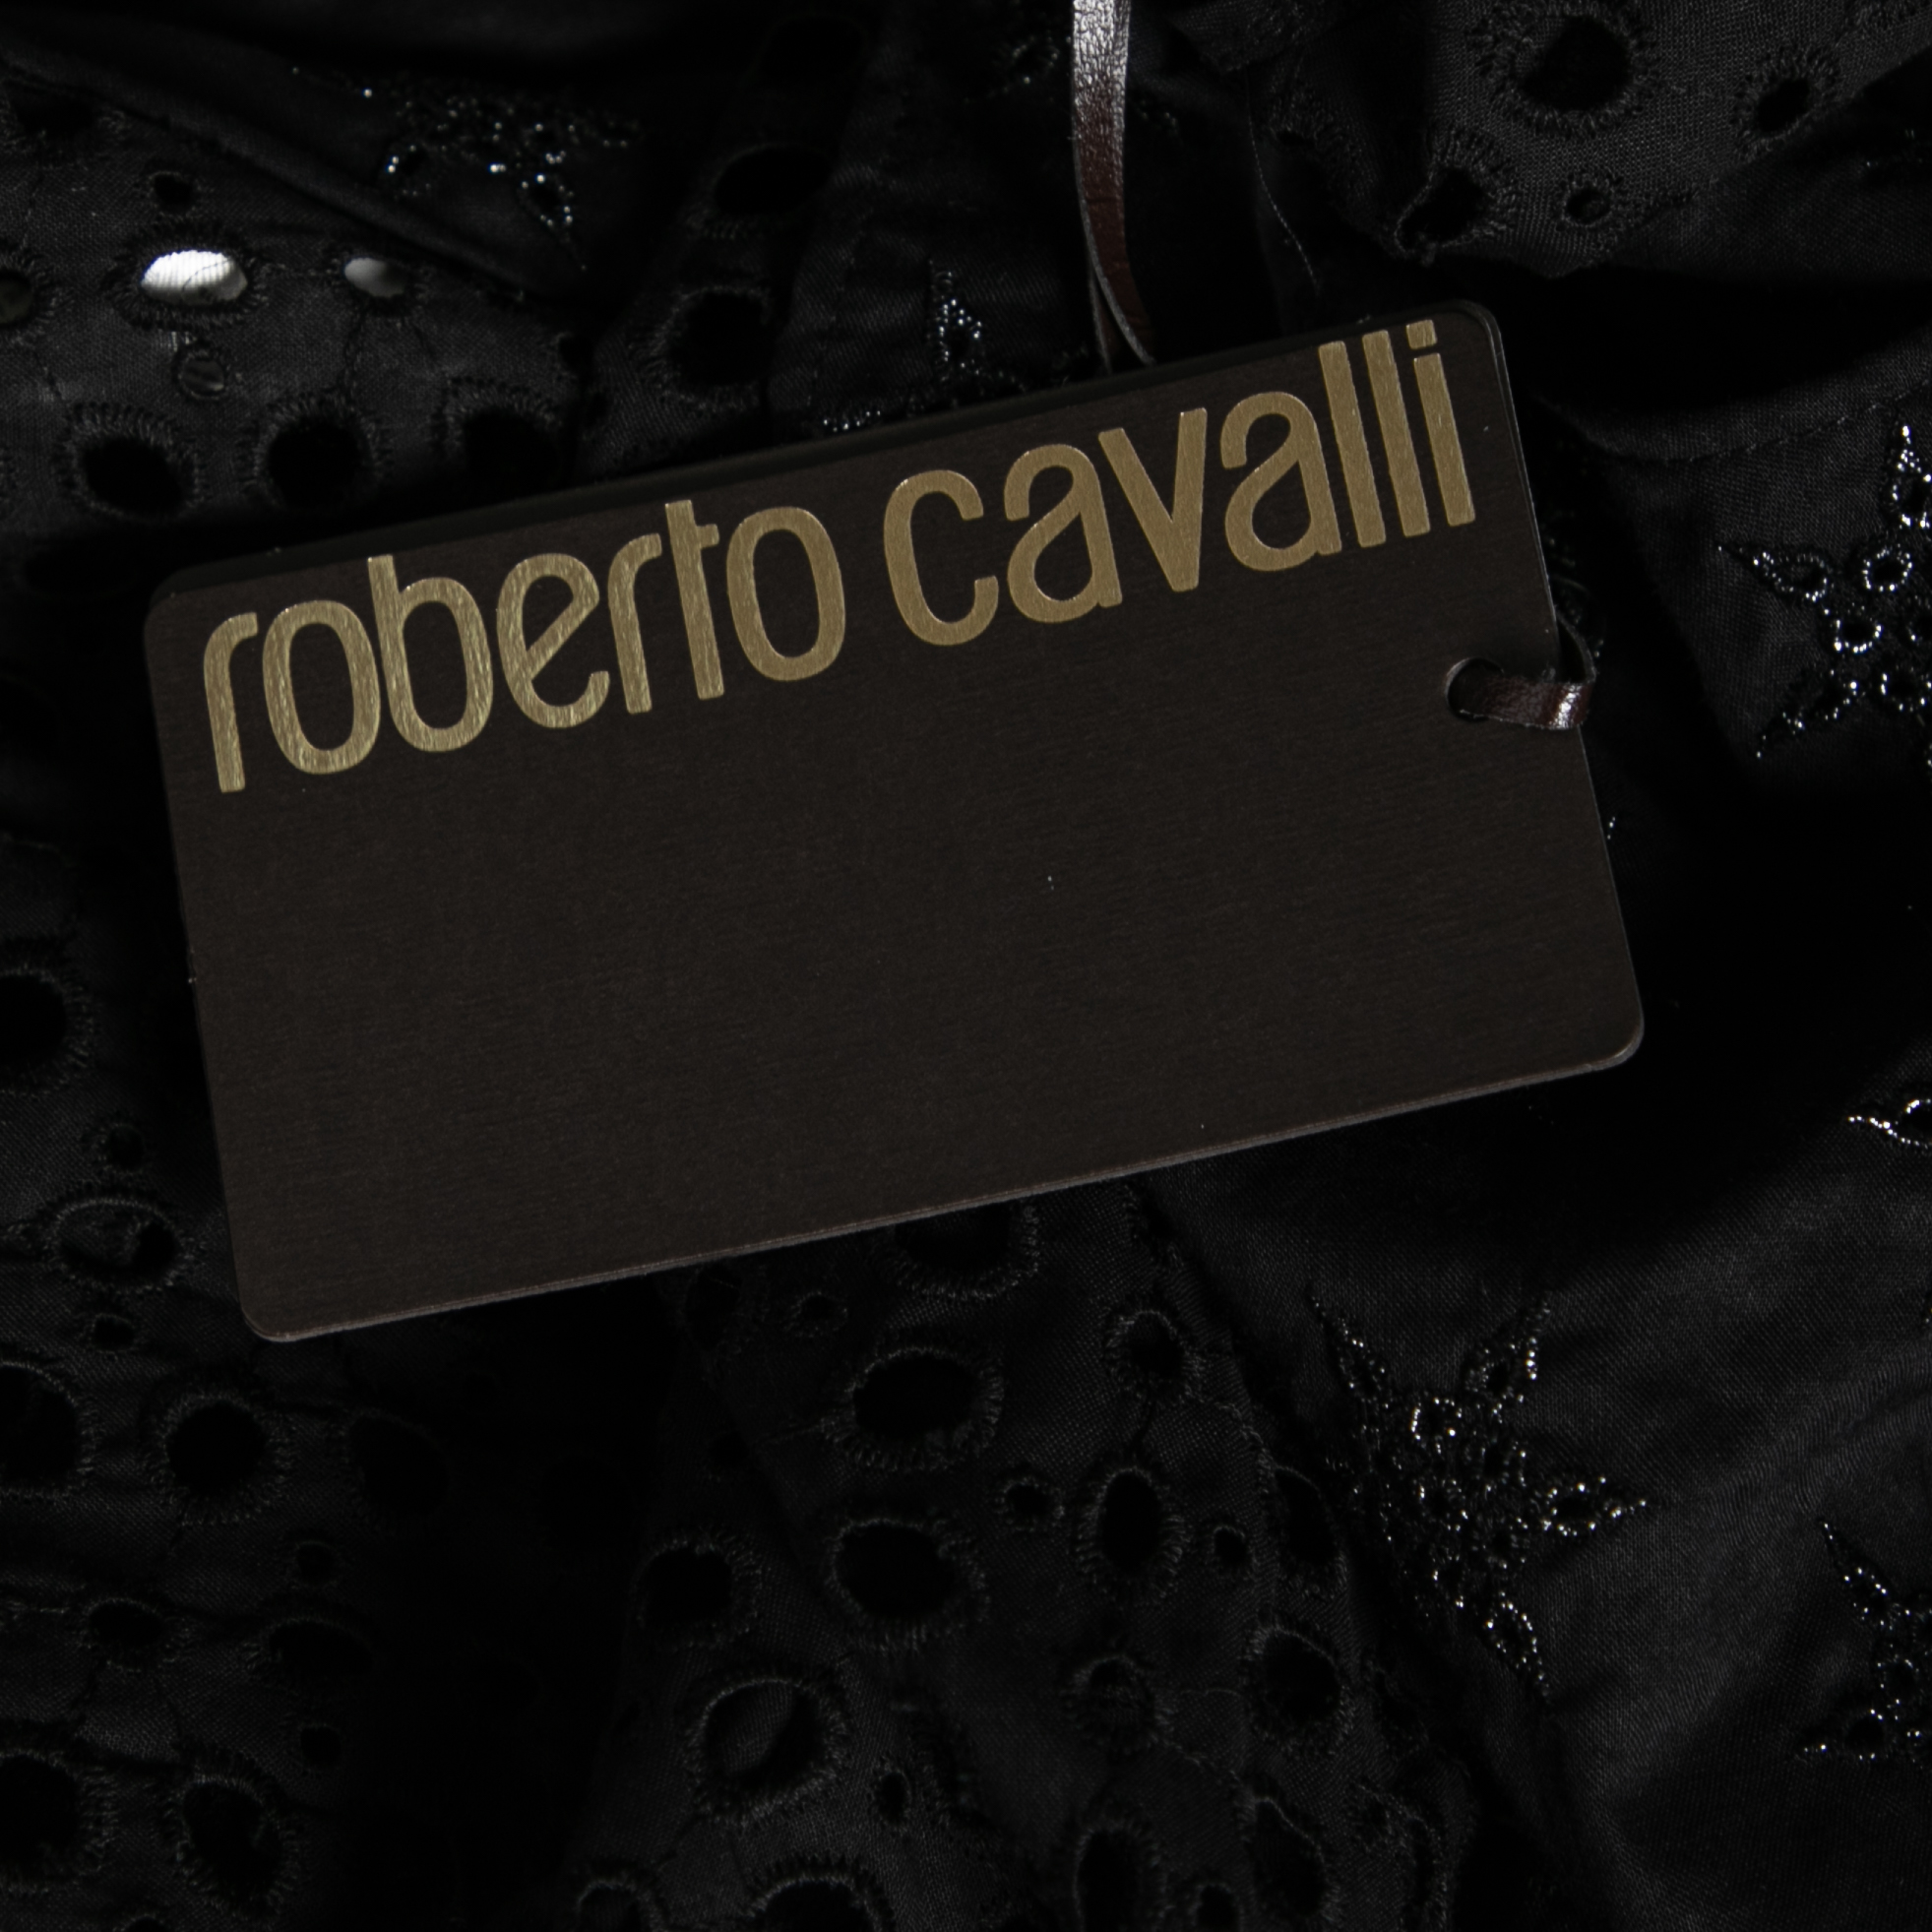 Roberto Cavalli Black Cutwork Cotton Sleeveless Top M